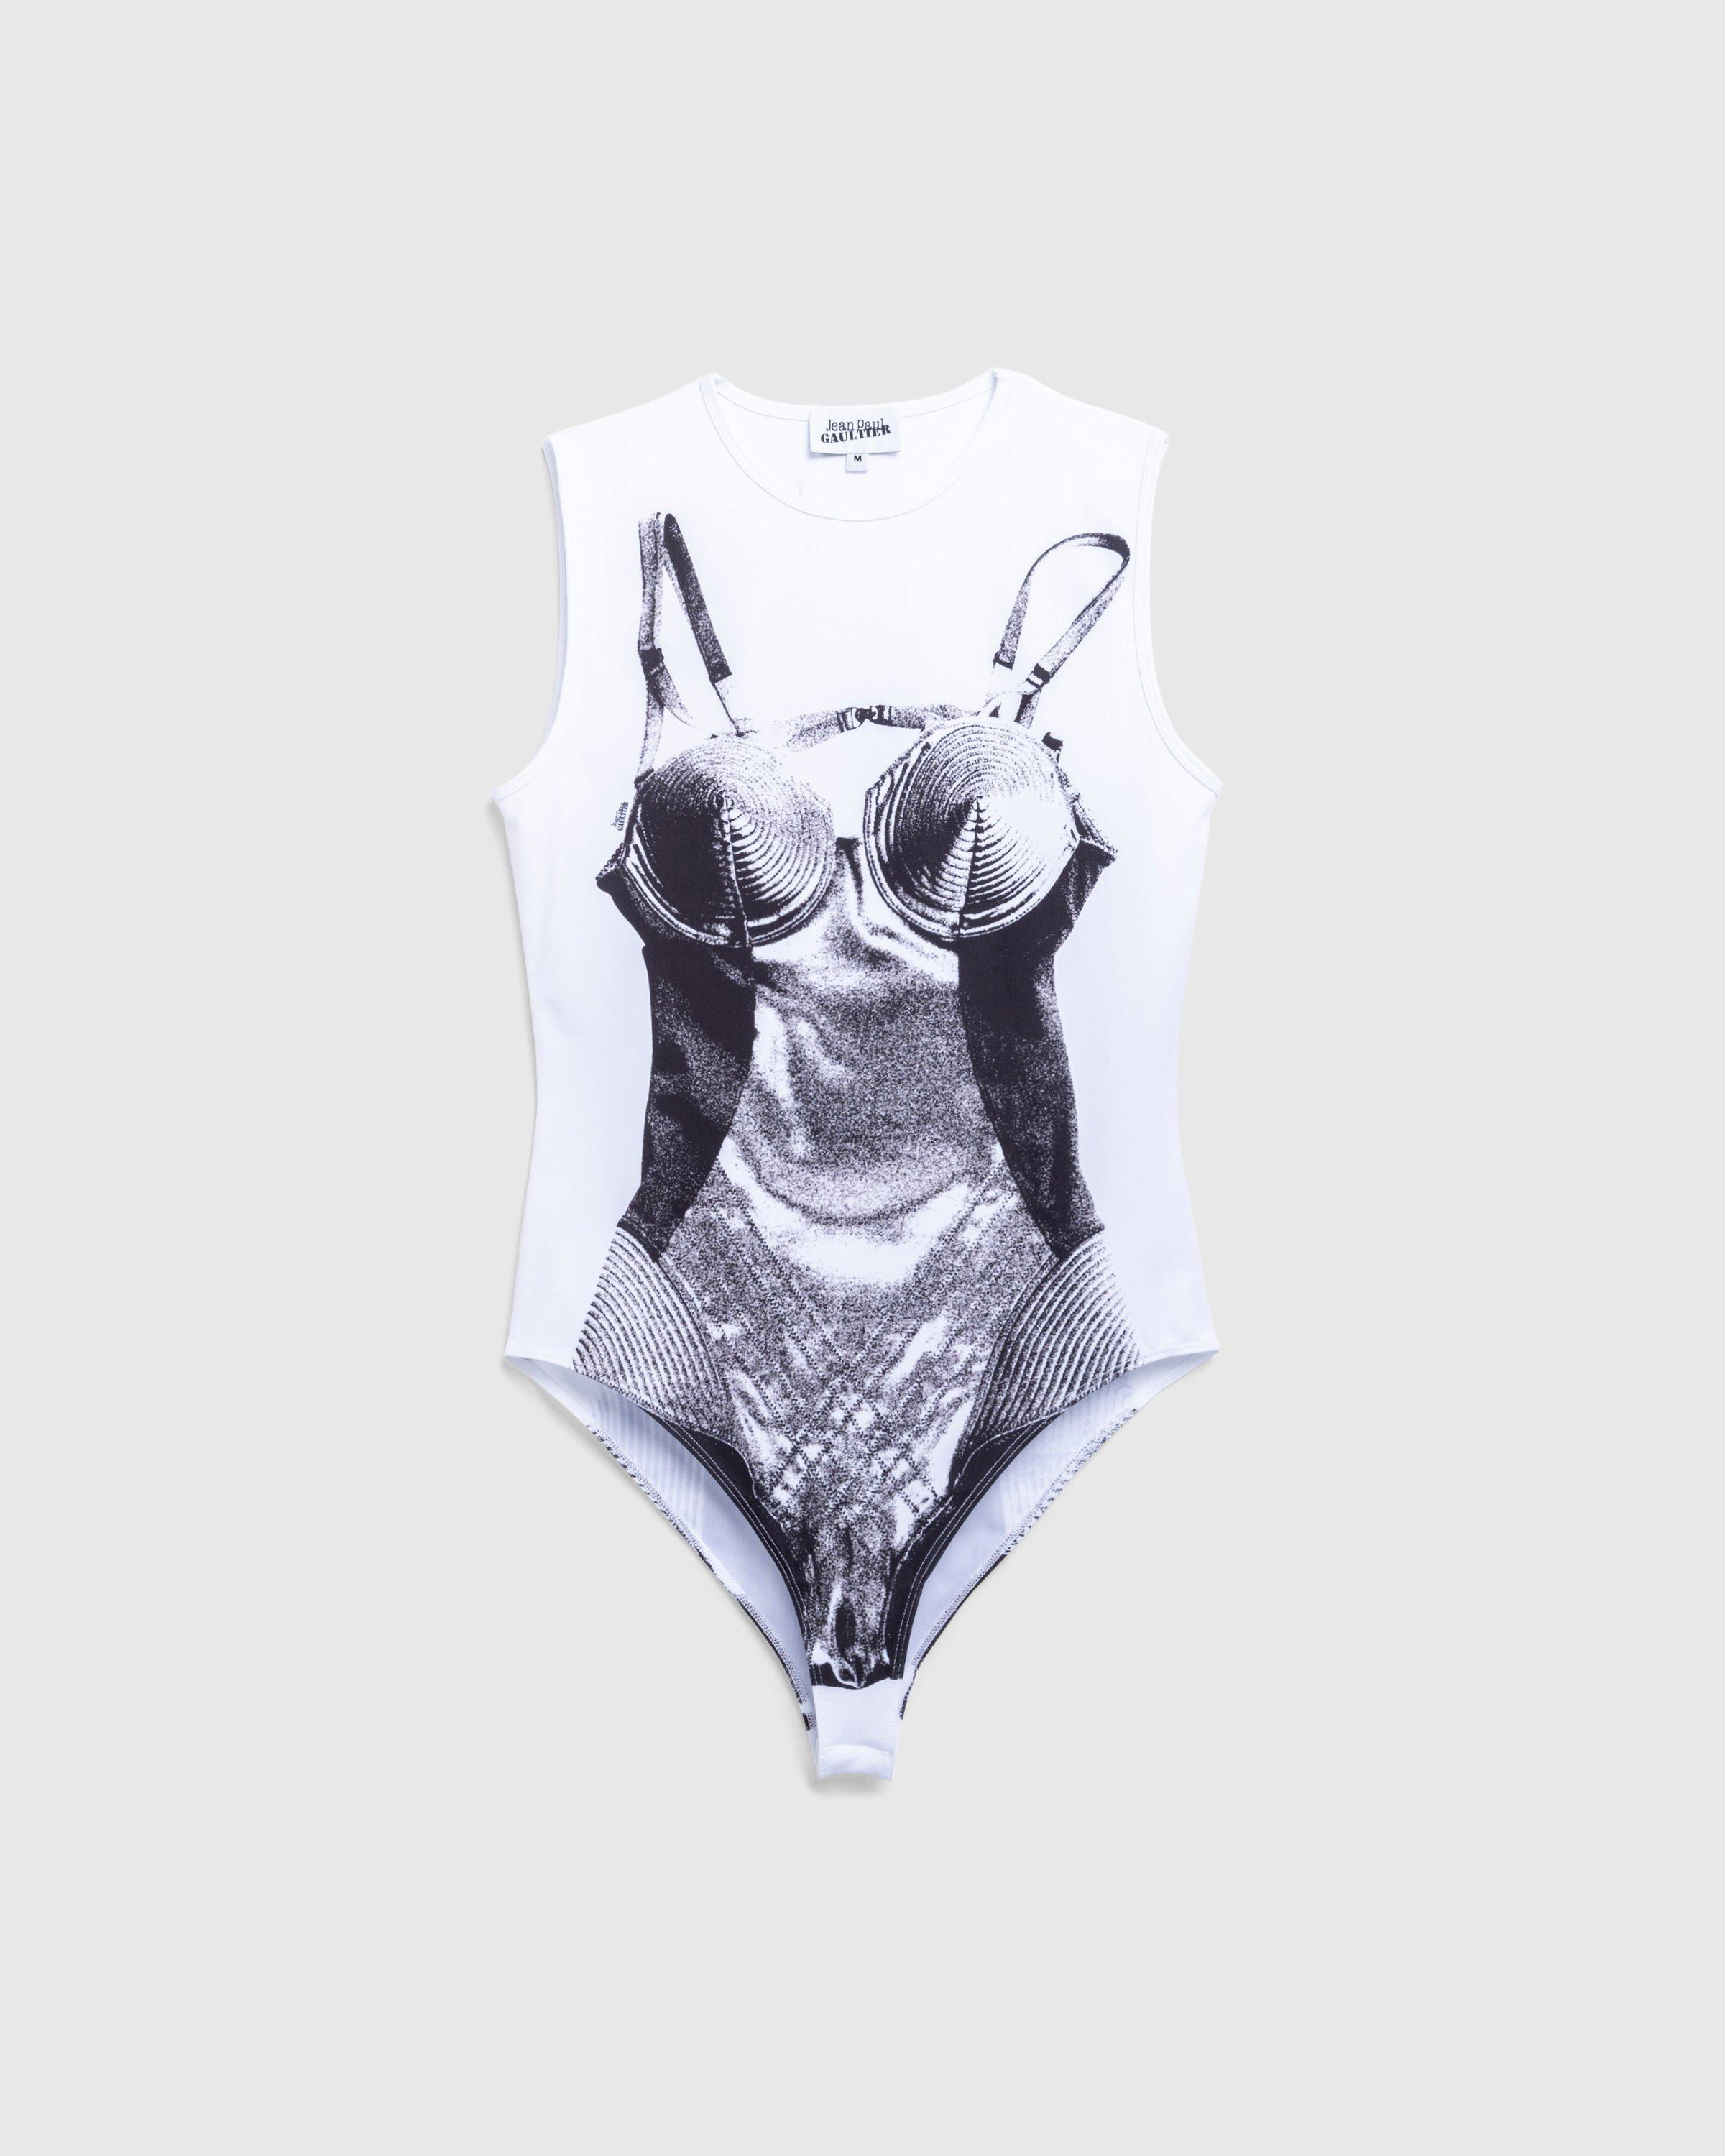 Jean Paul GaultierJersey Body Printed Madonna Corset Trompe L'Œil White/Black by HIGHSNOBIETY